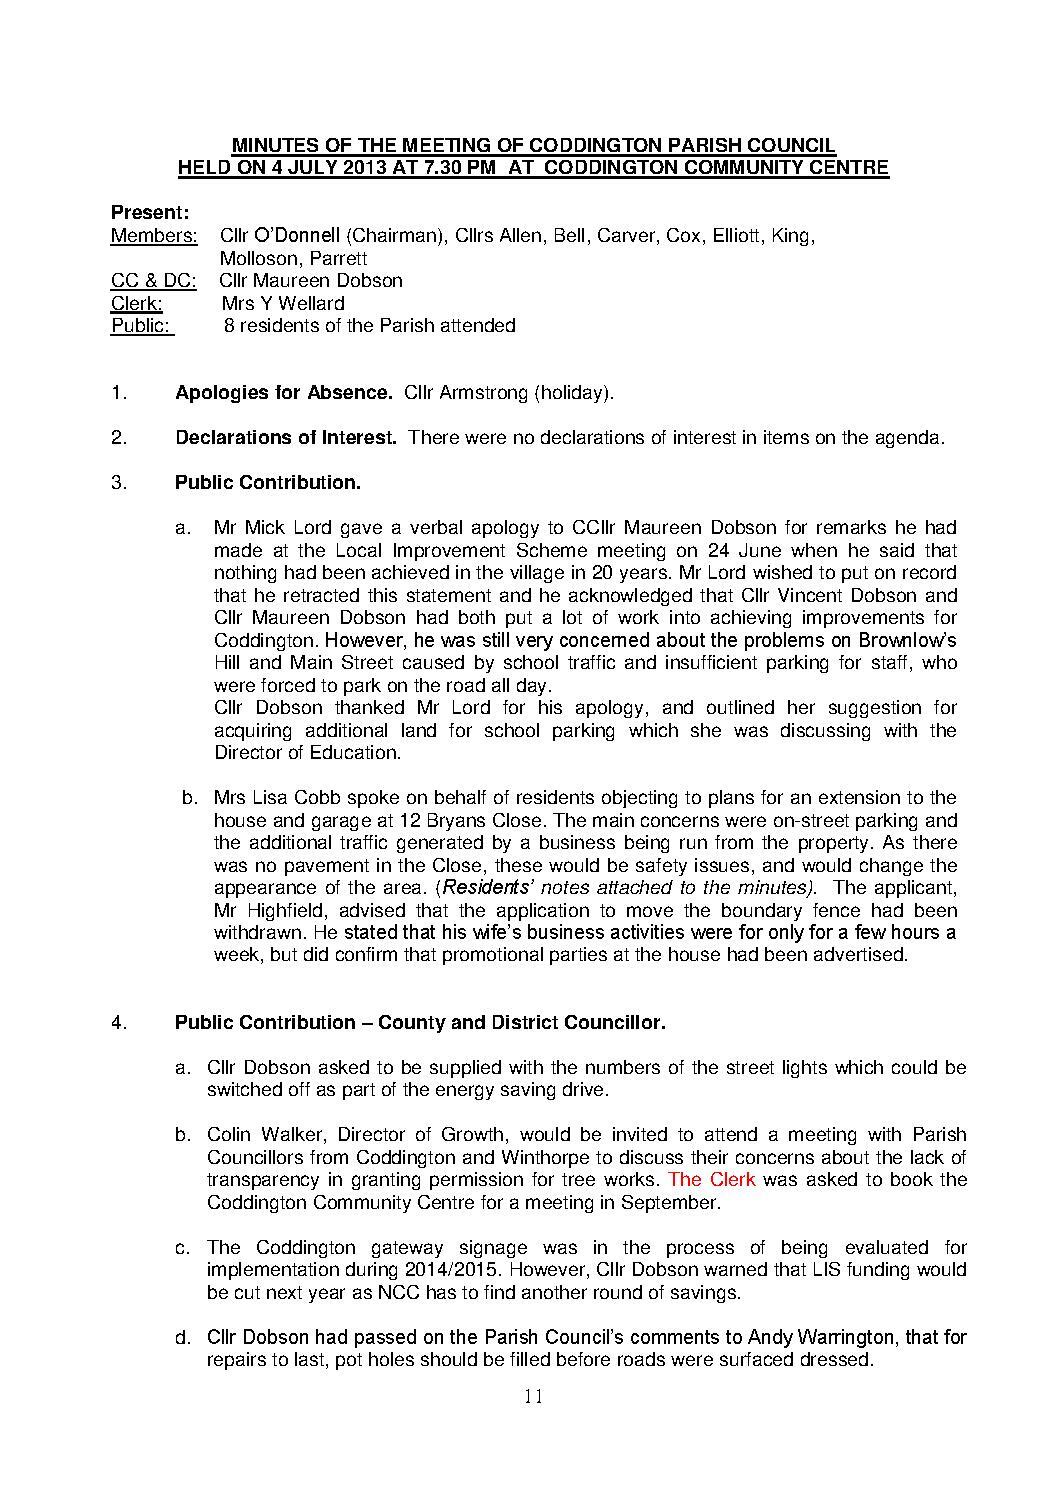 Parish Council Meeting 4 July 2013 Minutes